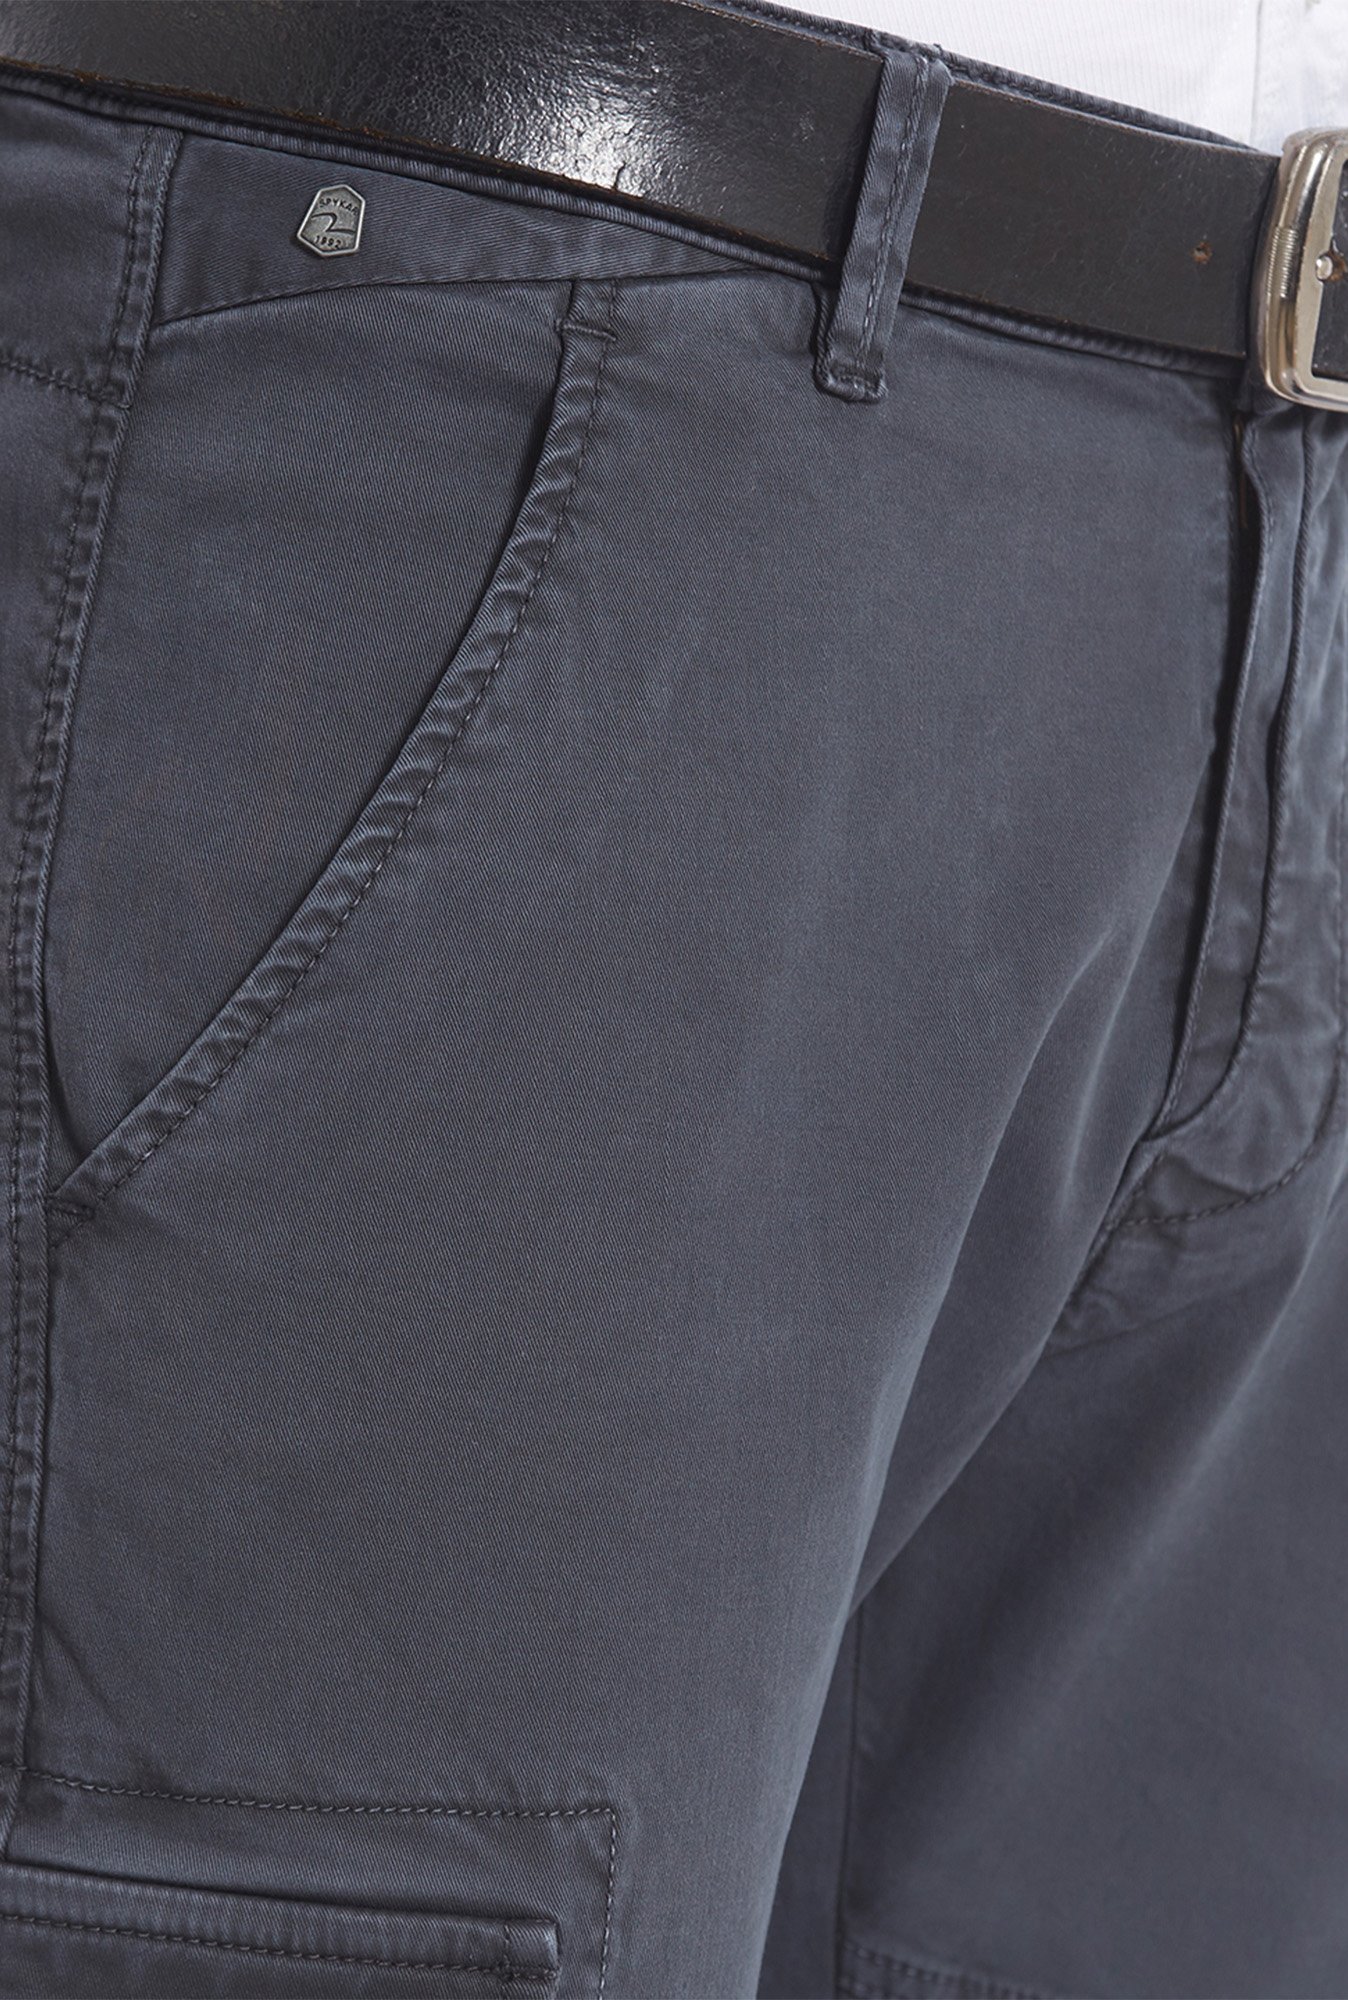 Buy Spykar Beige Slim Fit Lightly Washed Jeans for Mens Online  Tata CLiQ